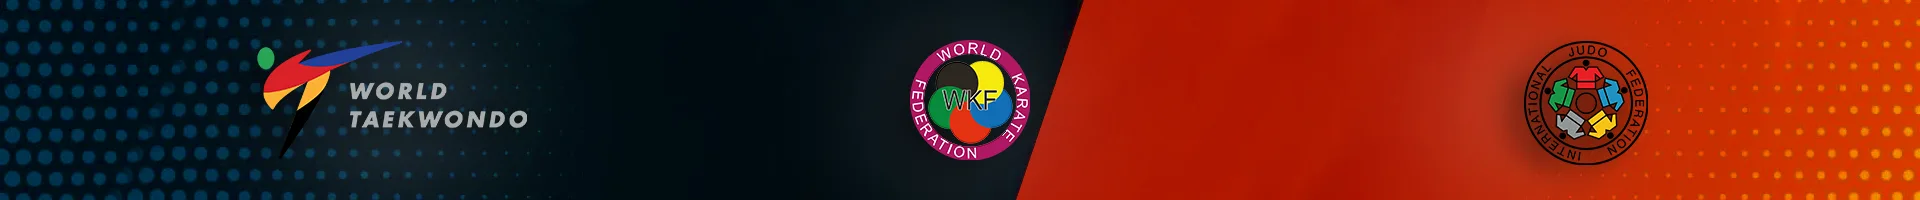 world-federation-banner-1920x200px-12.02.22-2